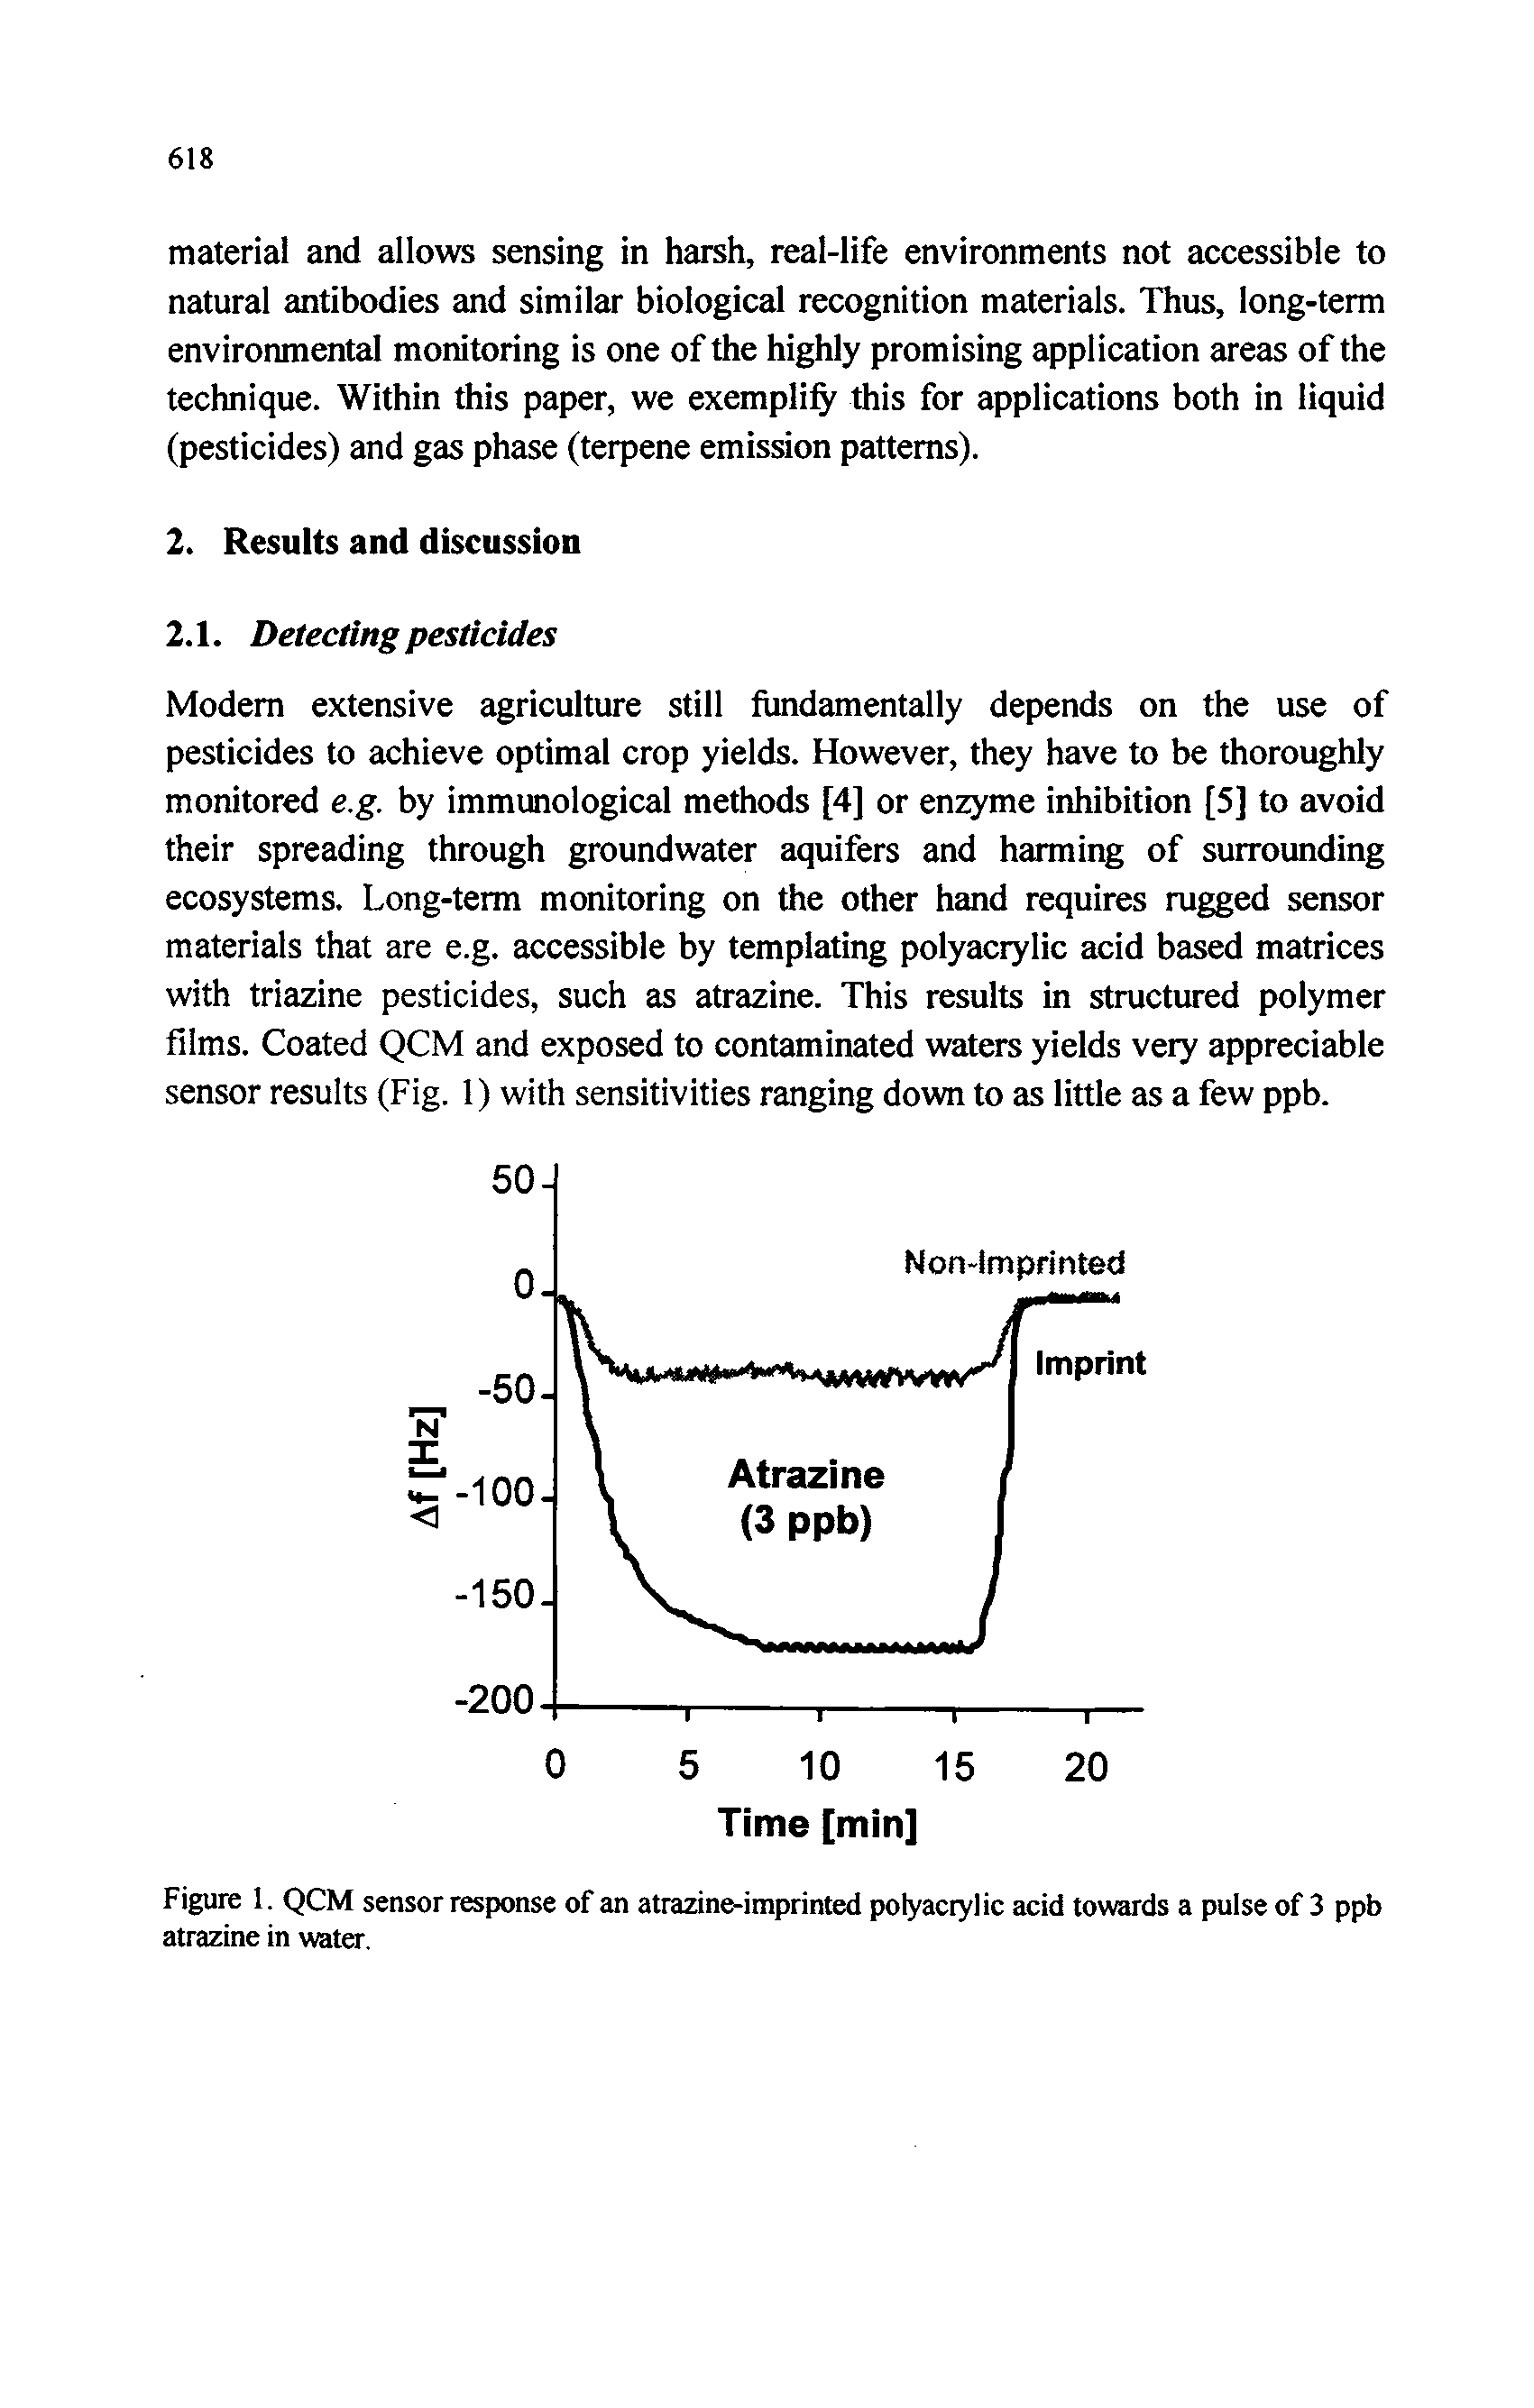 Figure 1. QCM sensor response of an atrazine-imprinted polyactylic acid towards a pulse of 3 ppb atrazine in water.